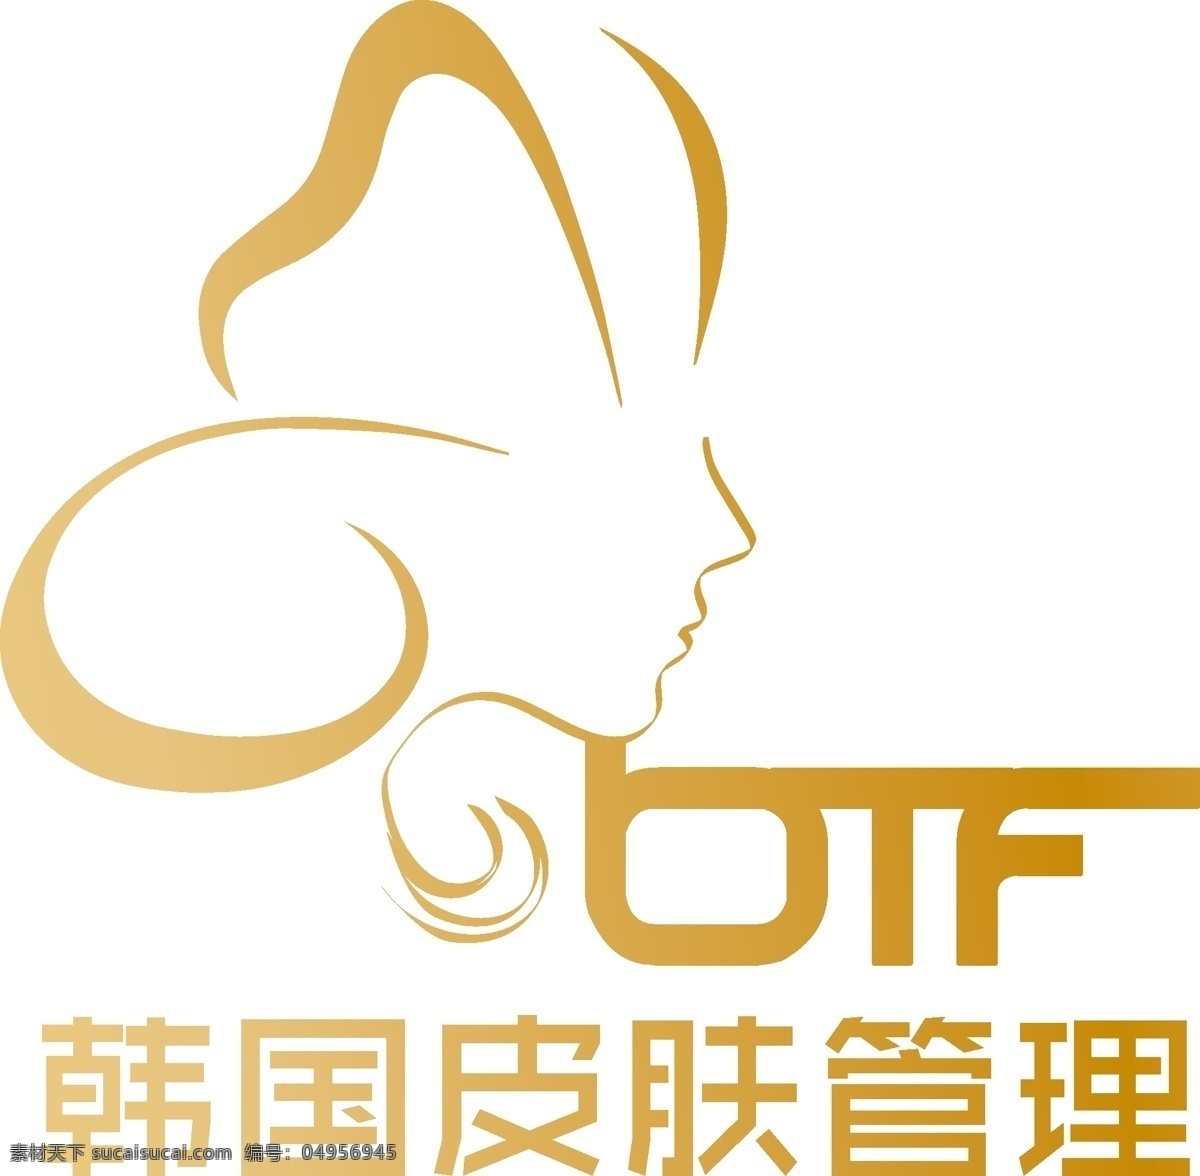 btf 韩国 皮肤 管理 logo 皮肤管理 美容 蝴蝶 人 logo设计 白色